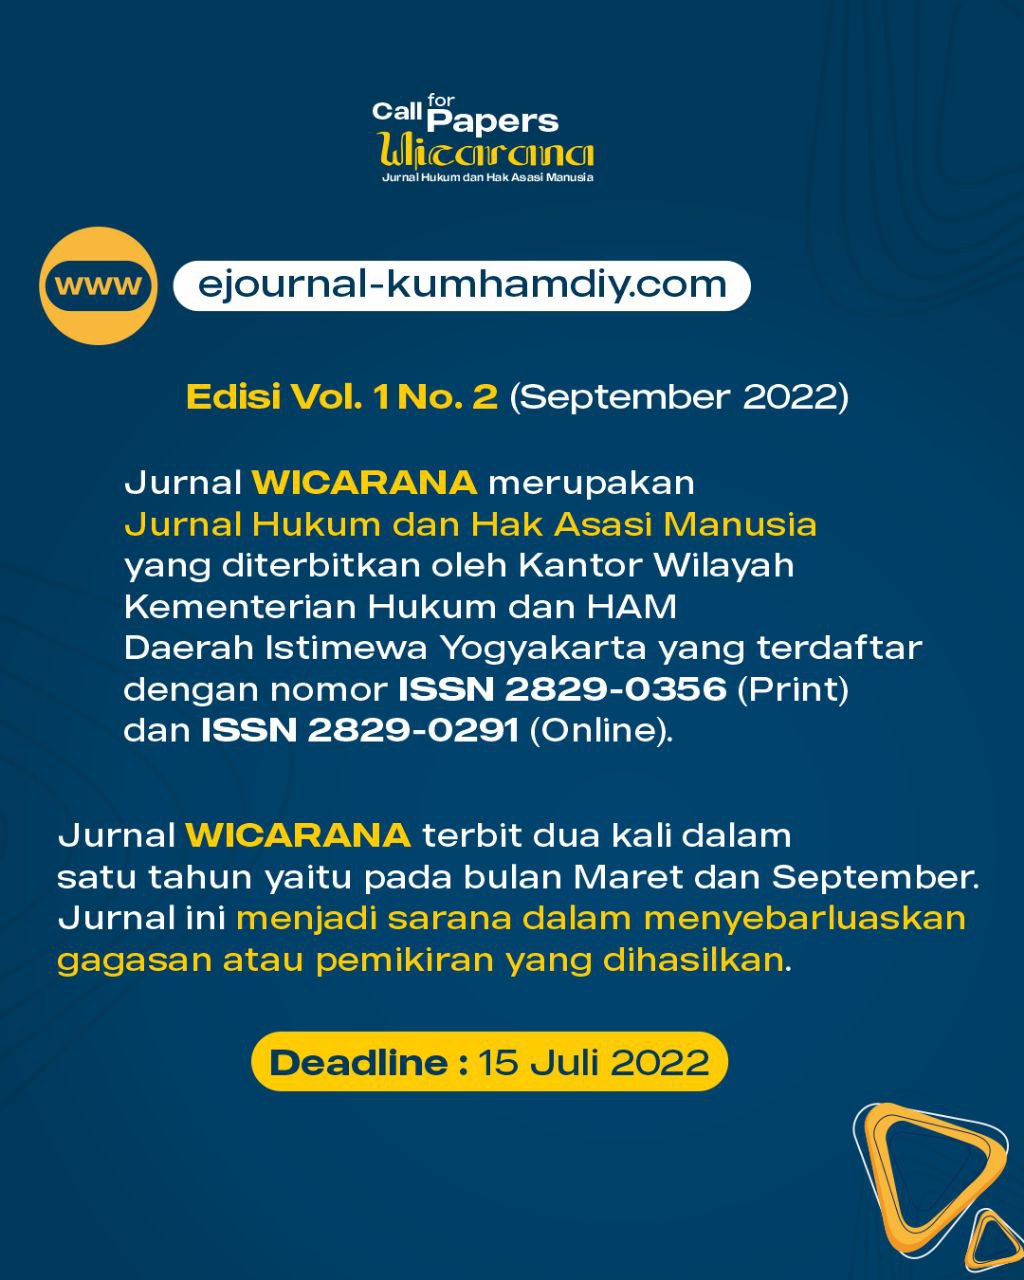 Call for Papers Jurnal Wicarana Vol. 1, No. 2, September 2022